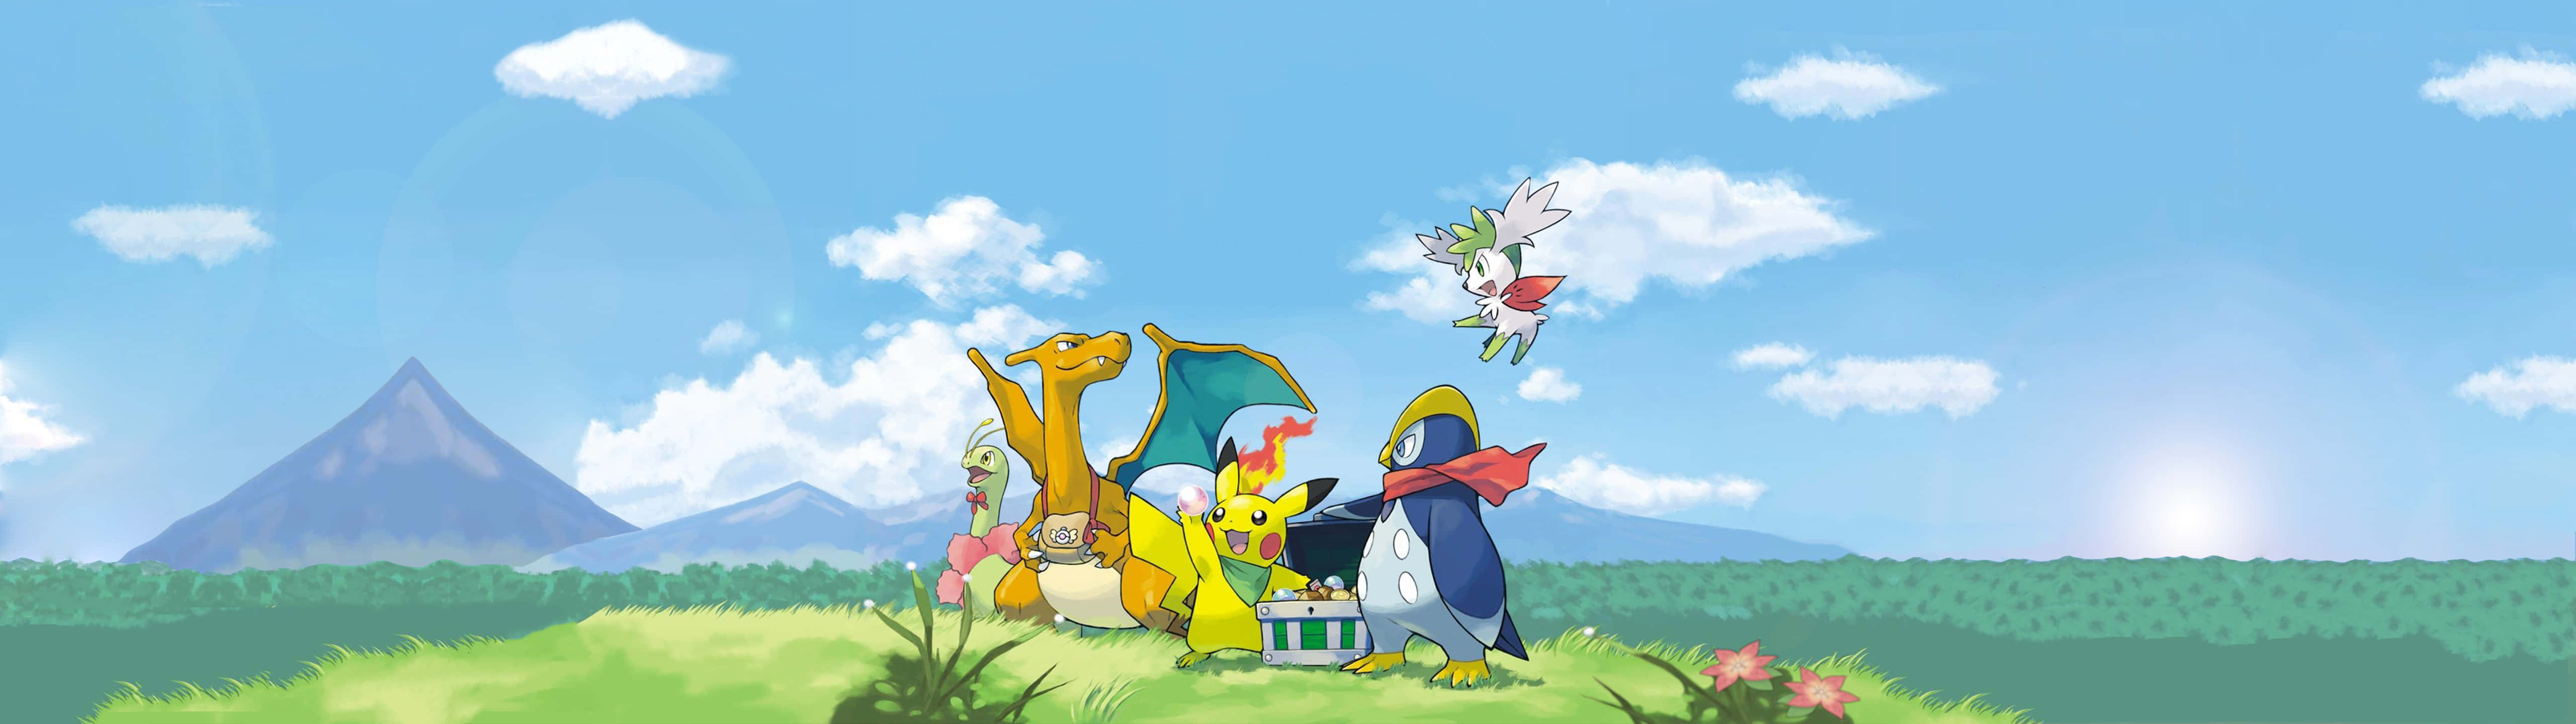 Pokémonhintergrundbilder, Pokémon Hintergrundbilder, Pokémon Hintergrundbilder, Pokémon Hintergrundbilder, Pokémon Hintergrundbilder Wallpaper